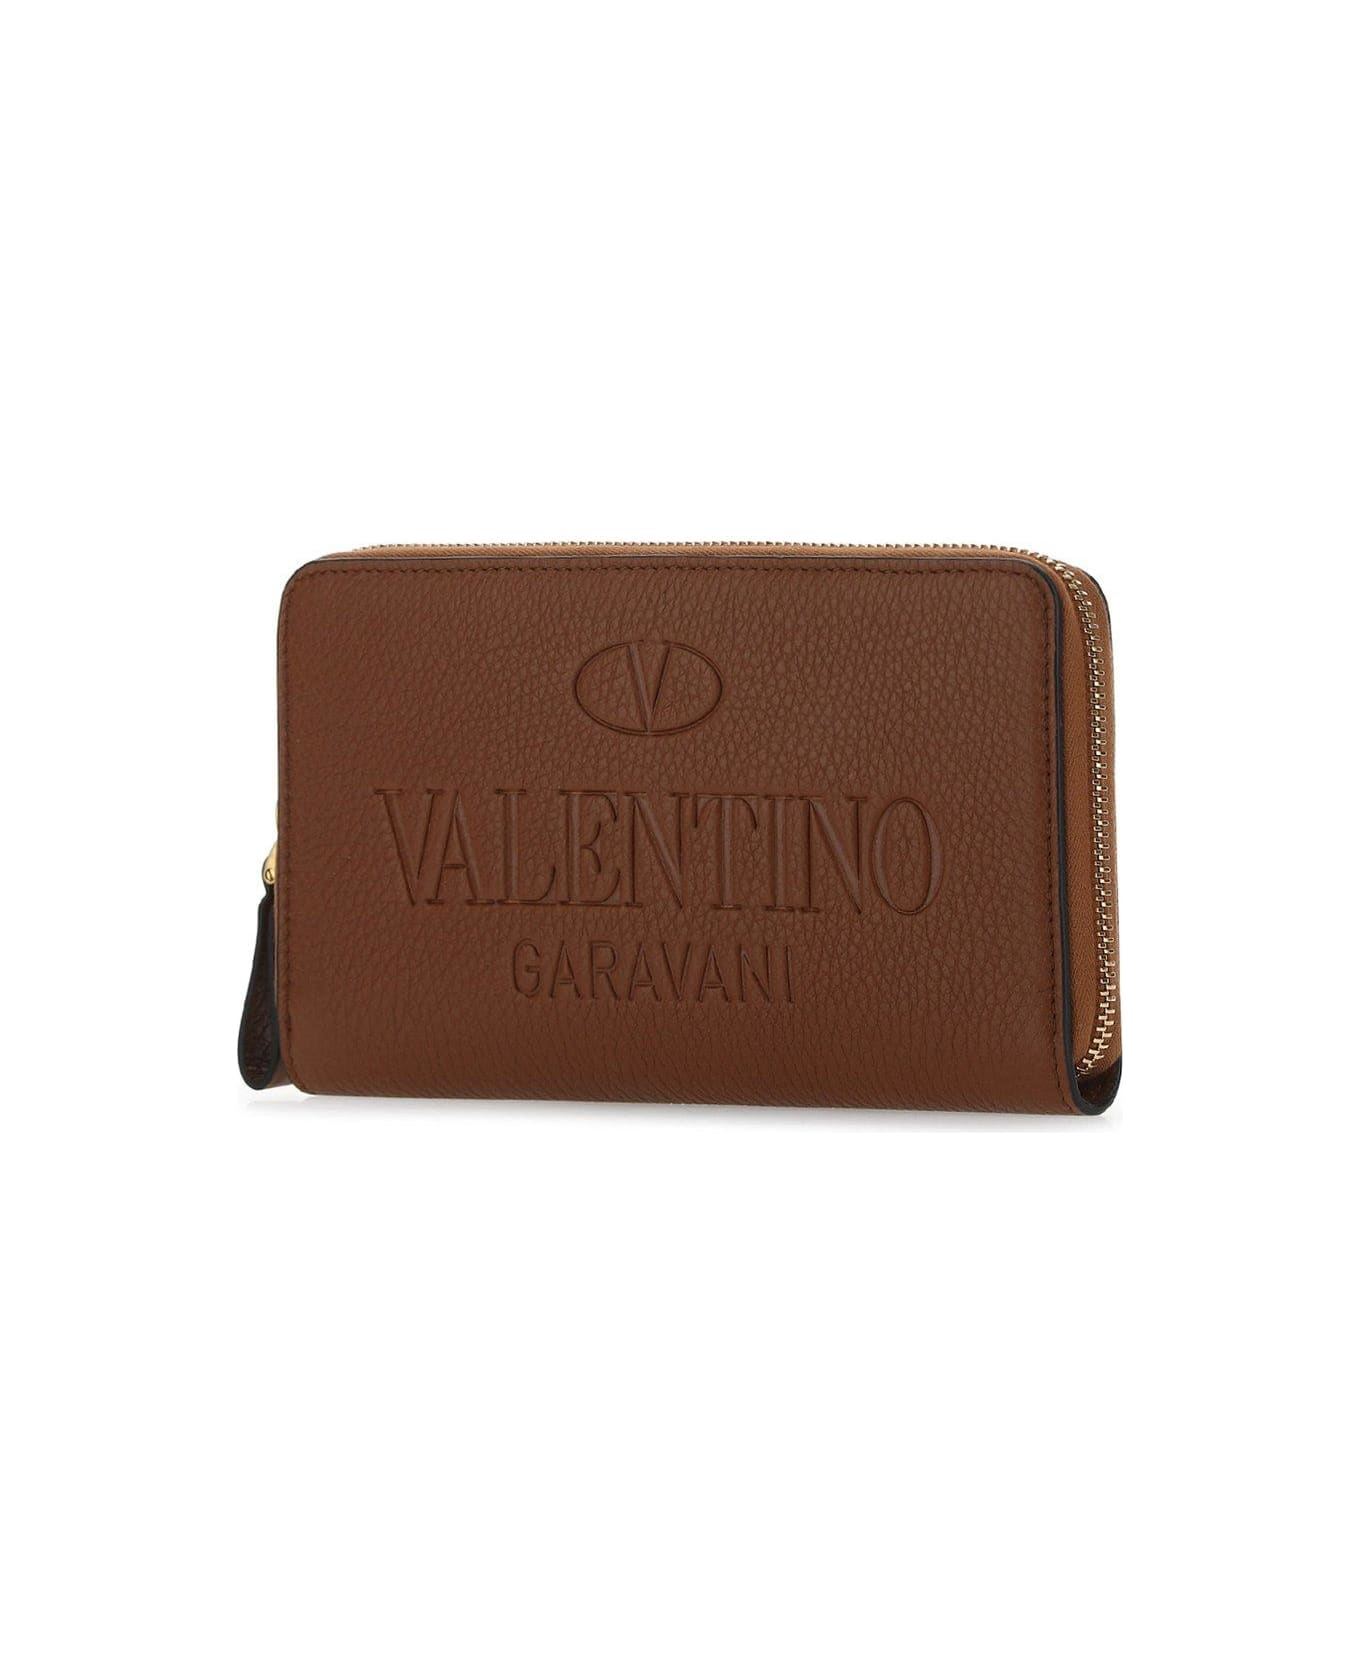 Valentino Garavani Logo Debossed Zip-up Wallet - Selleria/antique brass